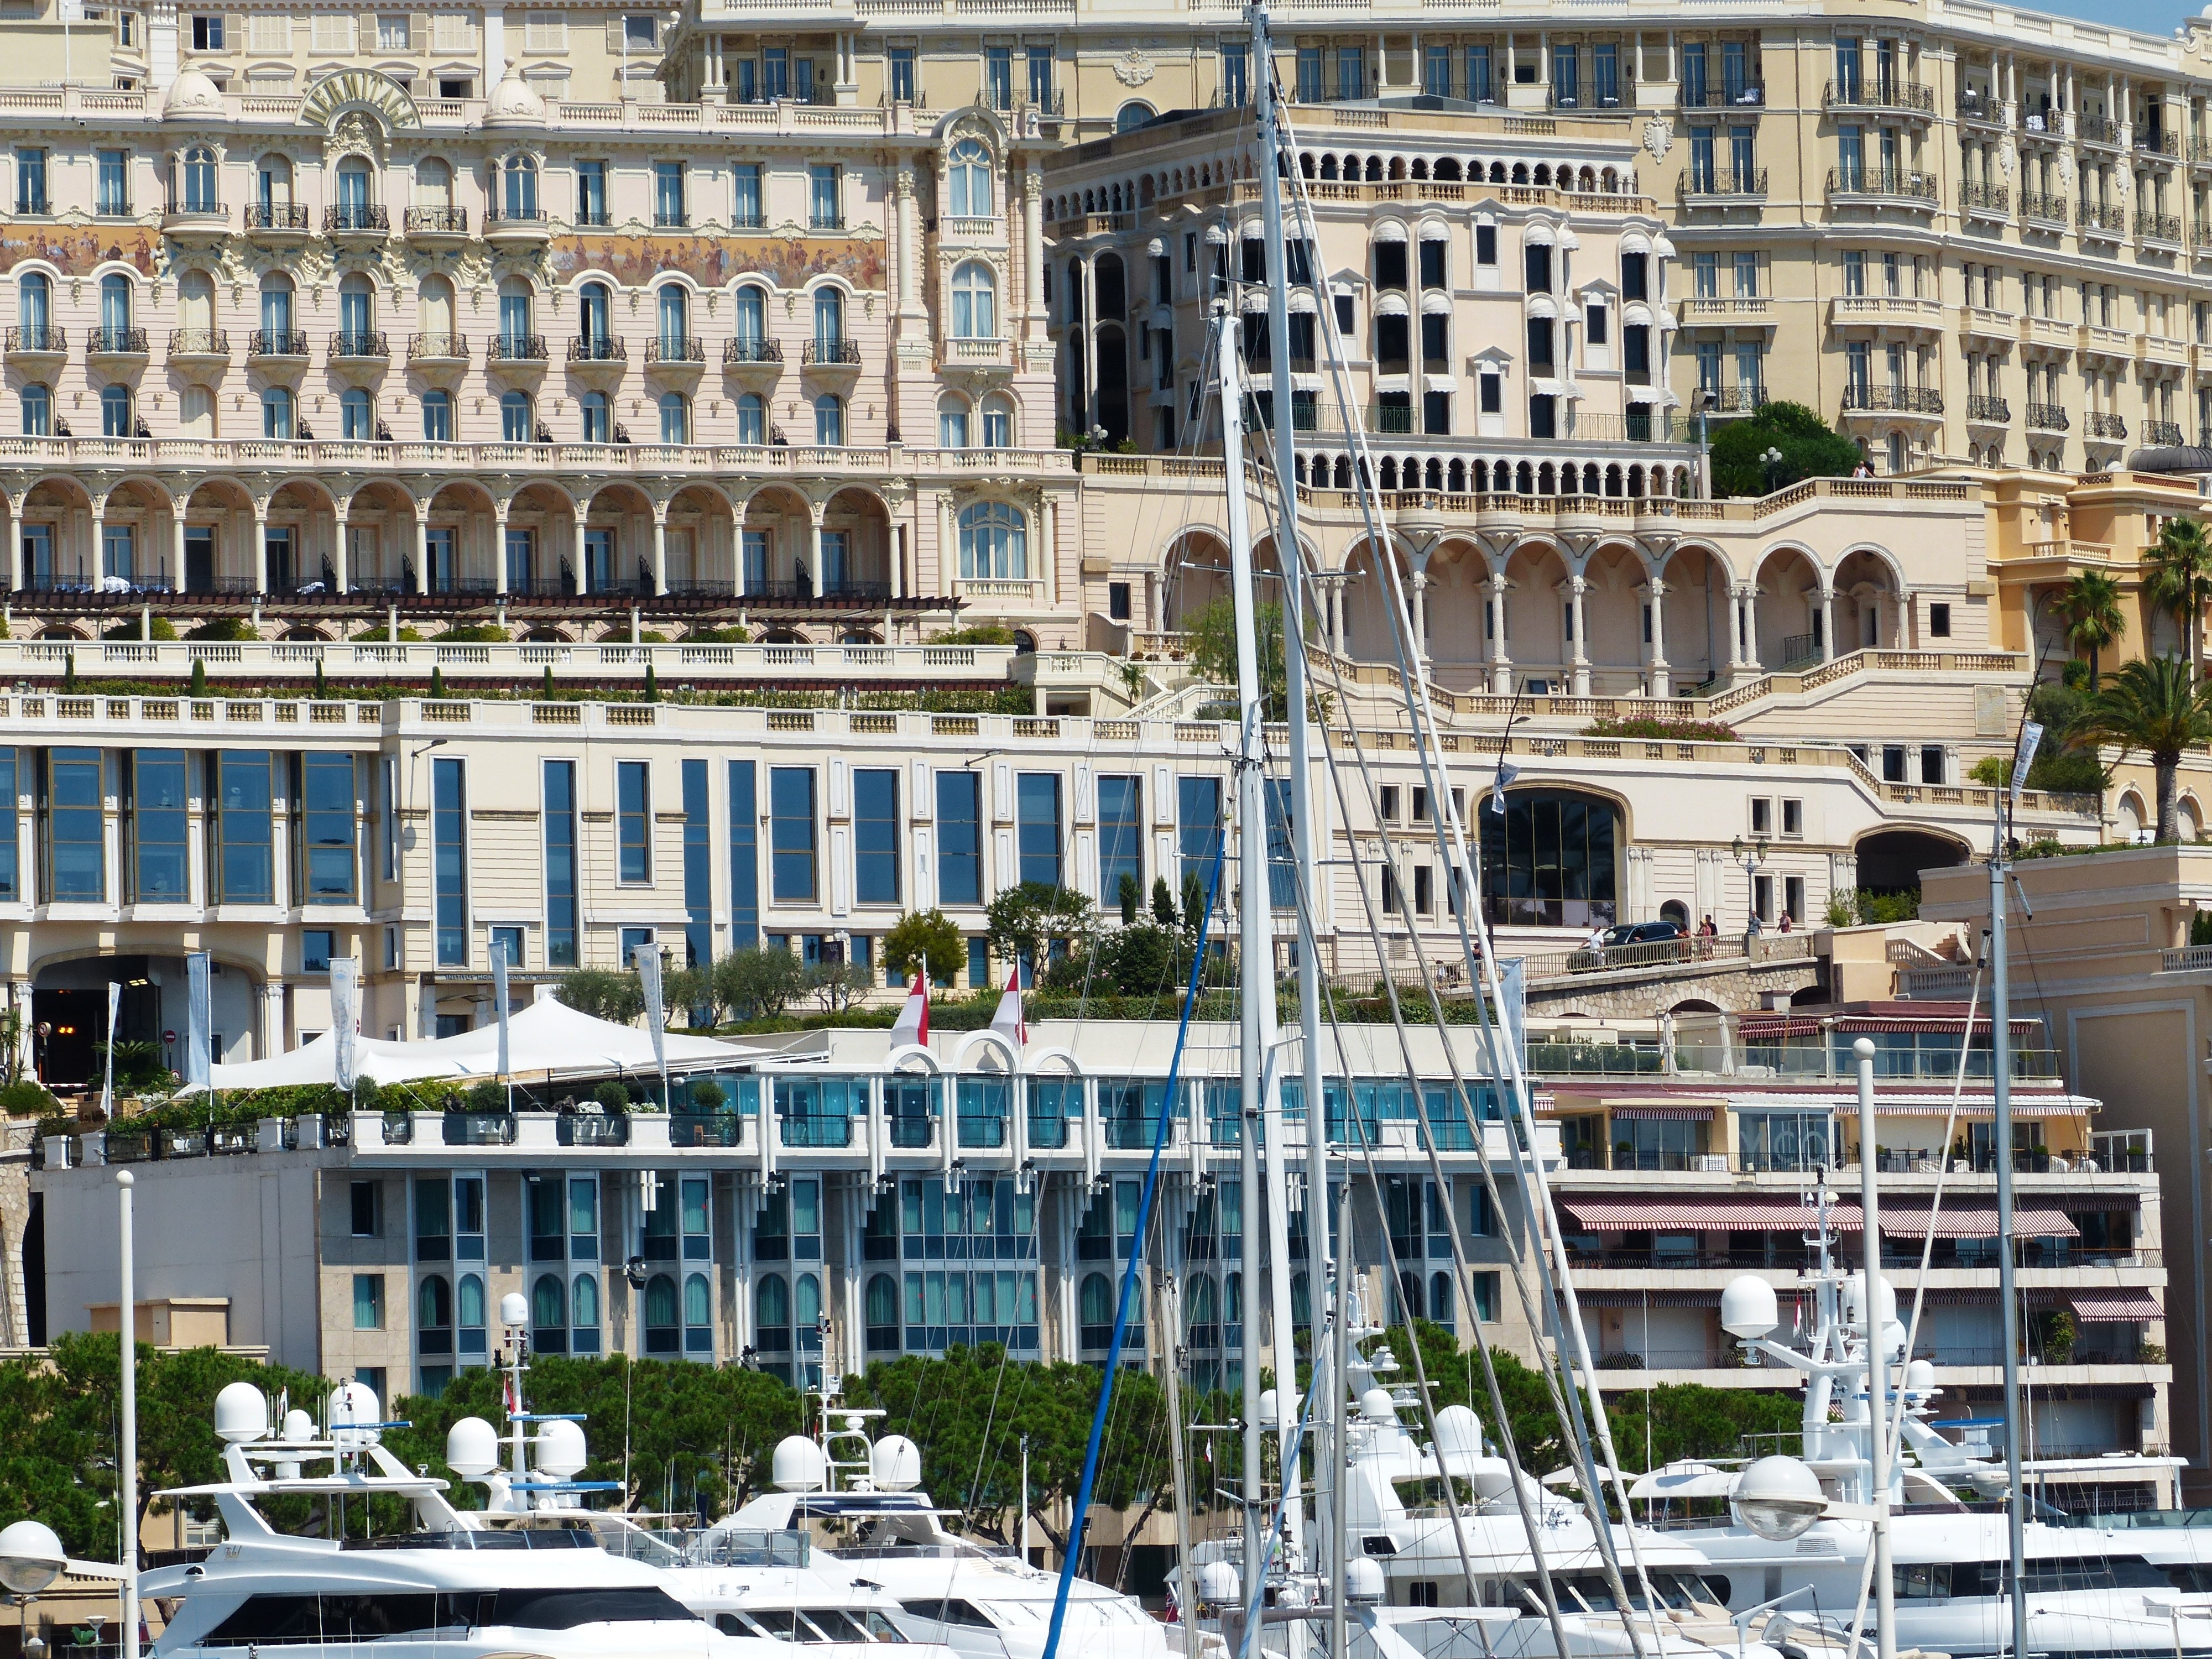 Apartments, Monaco, Homes, Building, architecture, building exterior